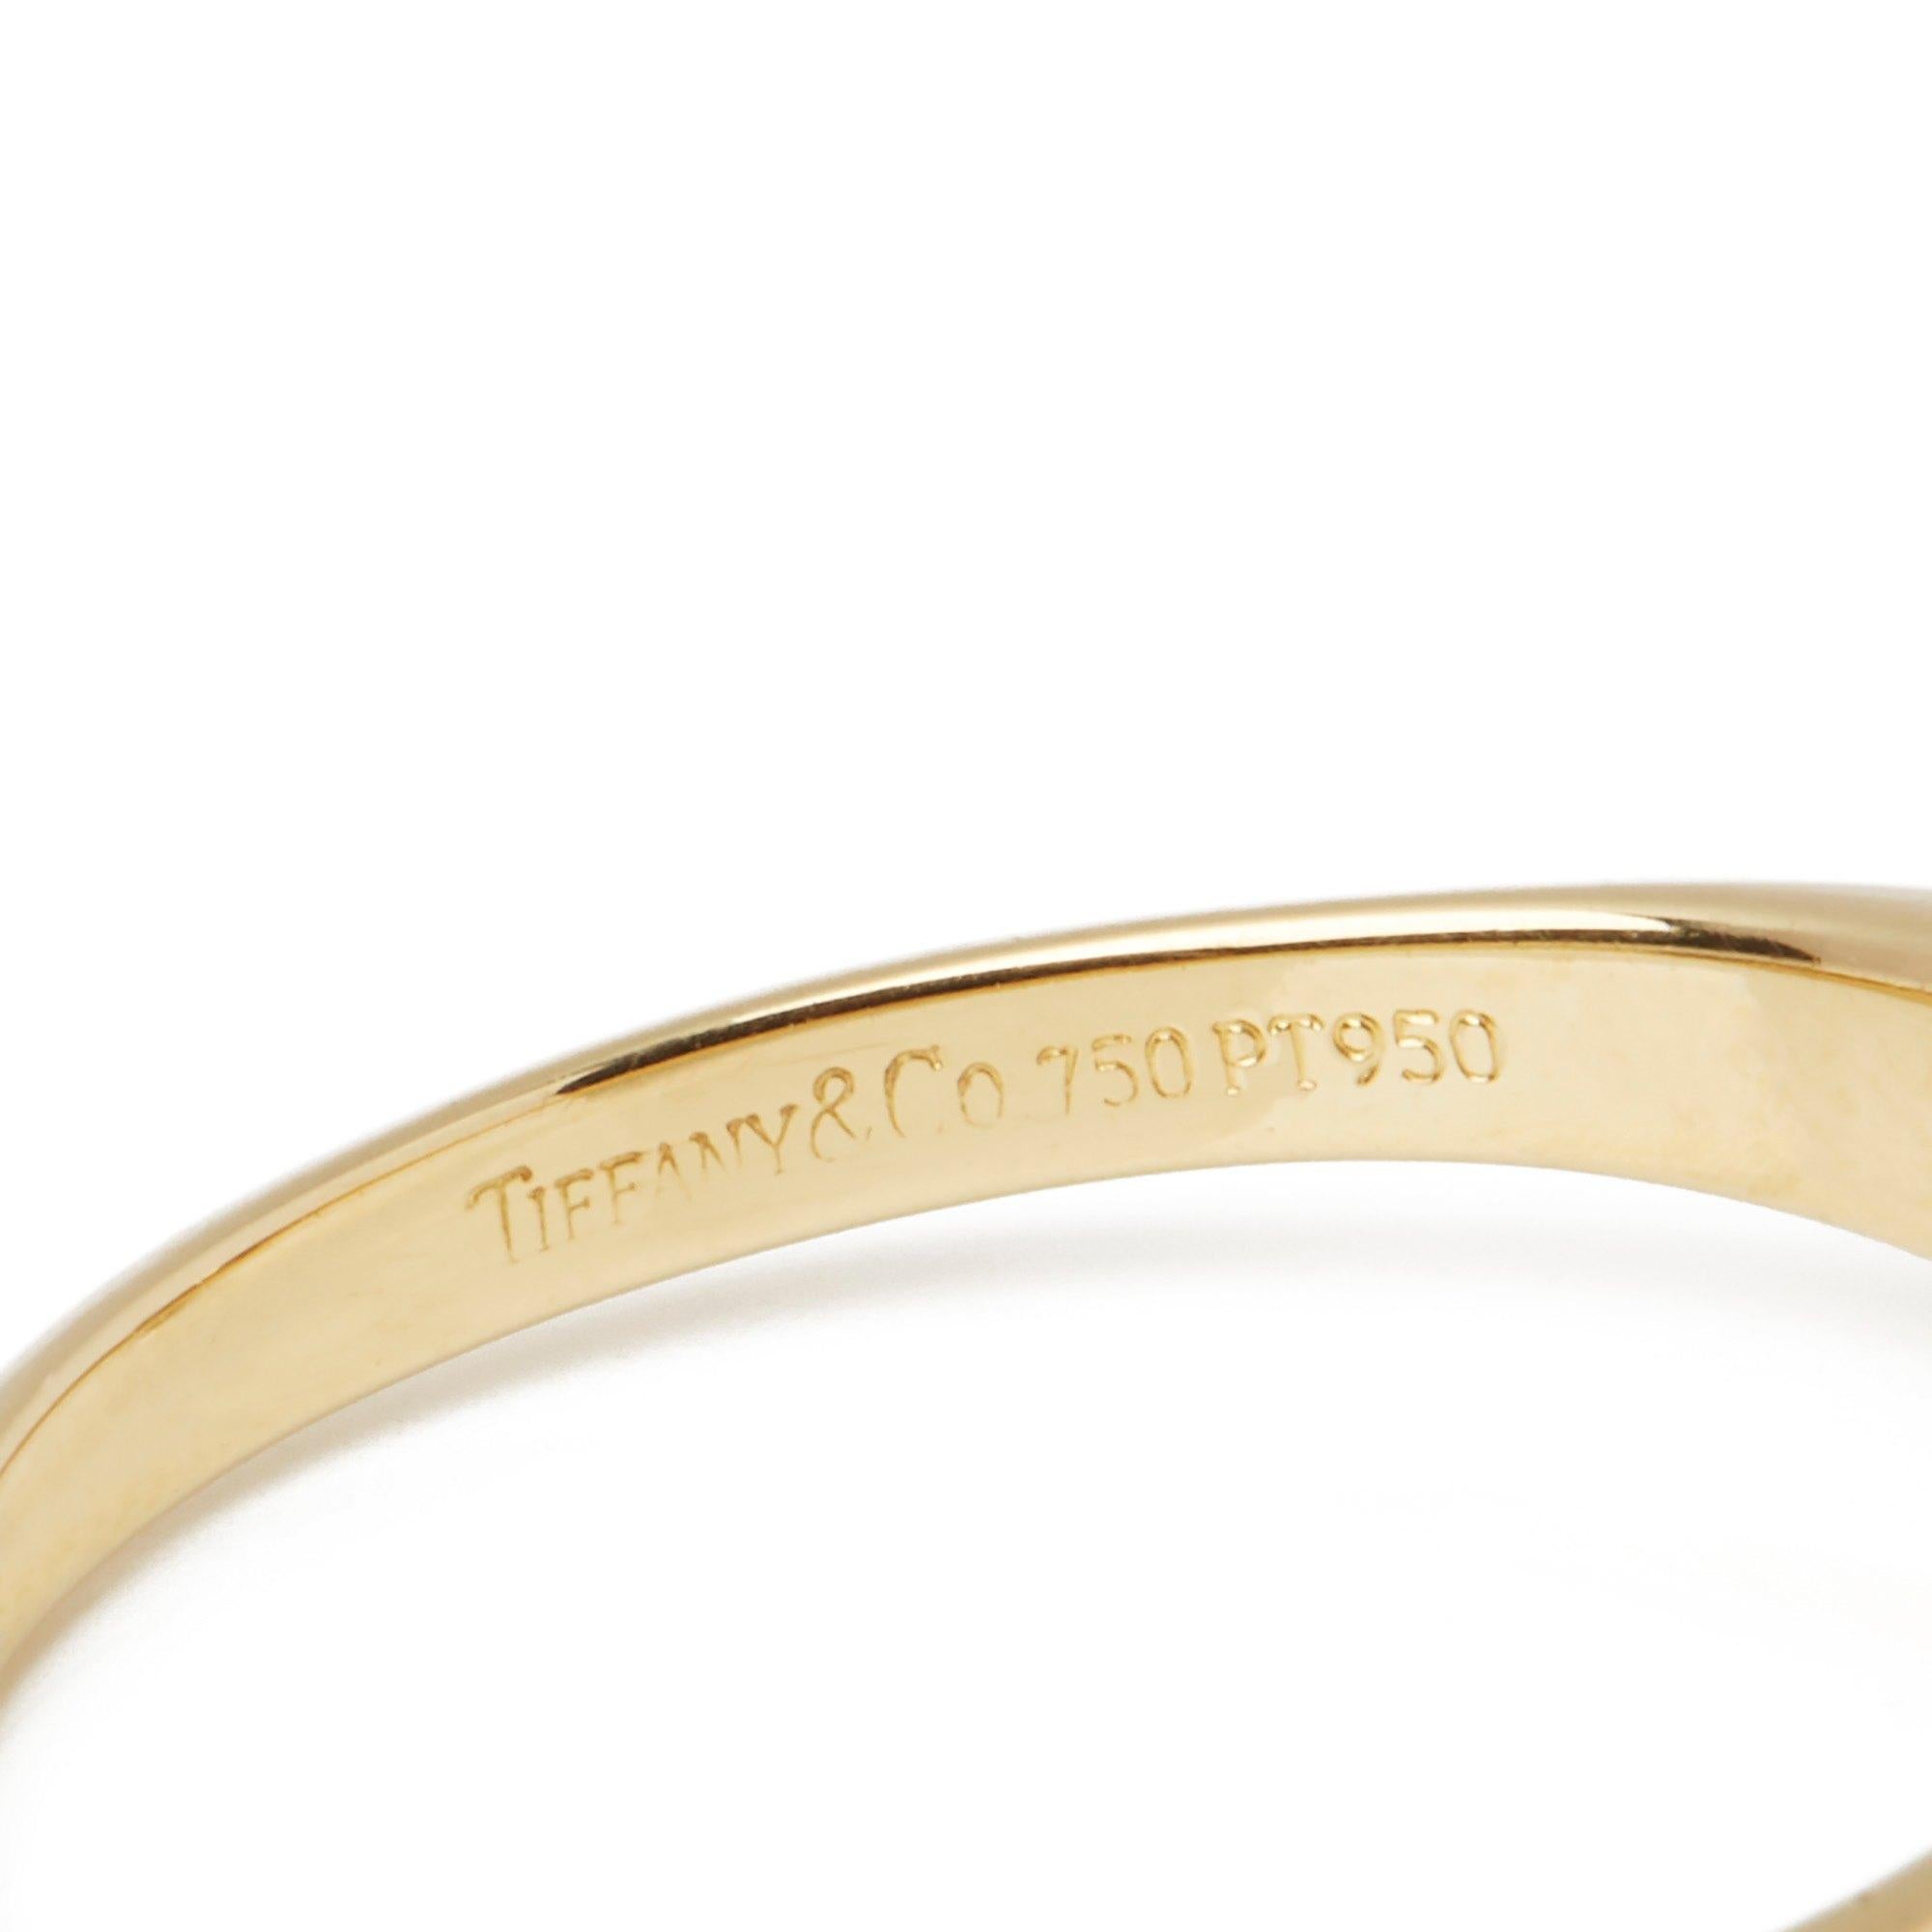 Brilliant Cut Tiffany & Co. 18 Karat Yellow Gold Solitaire Diamond Ring